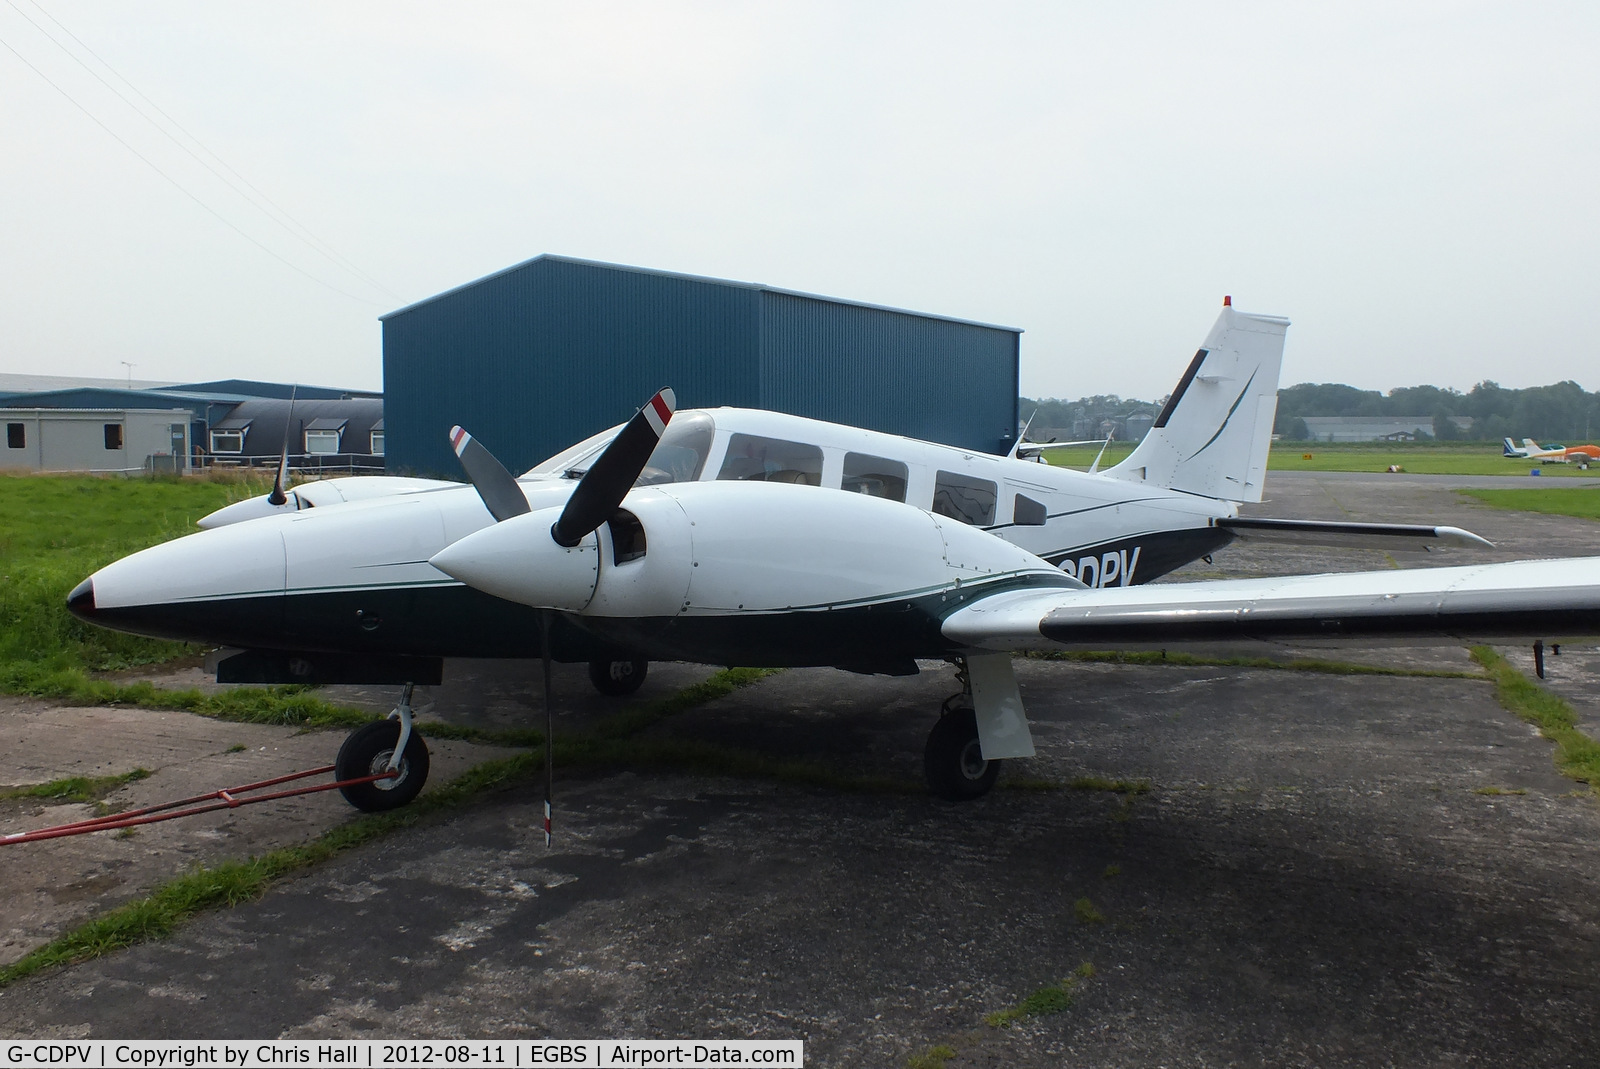 G-CDPV, 1980 Piper PA-34-200T Seneca II C/N 34-8070086, at Shobdon Airfield, Herefordshire